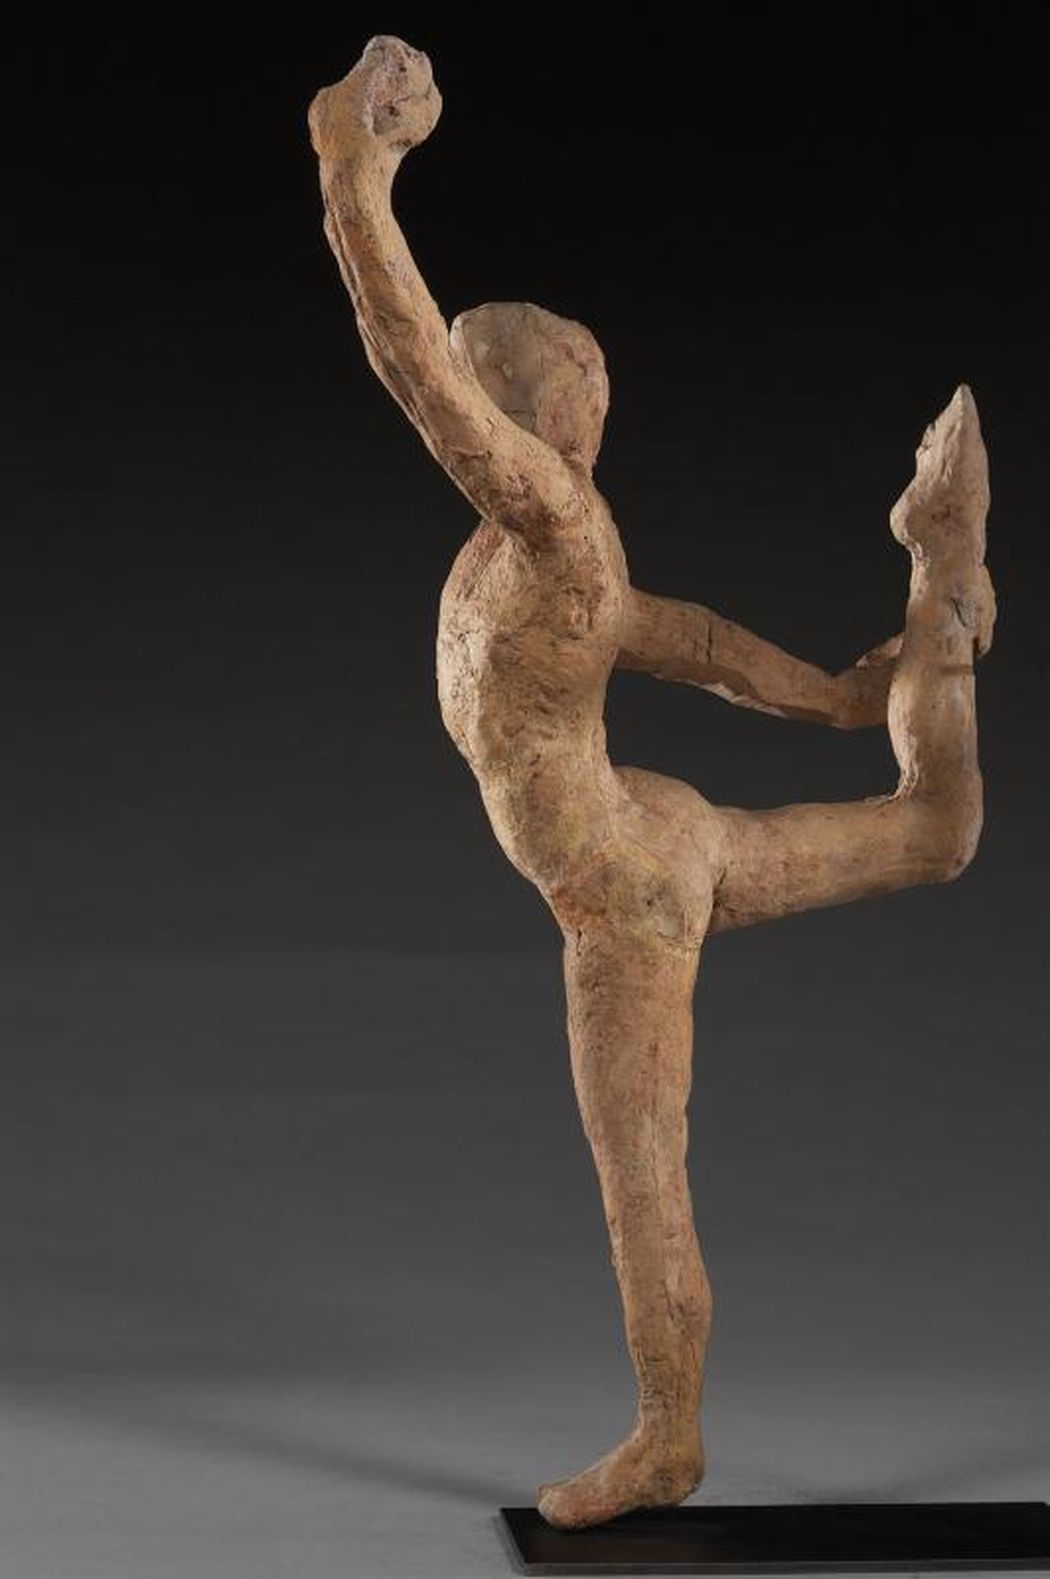 A dancer from Rodin's series of 'Mouvements de danse'